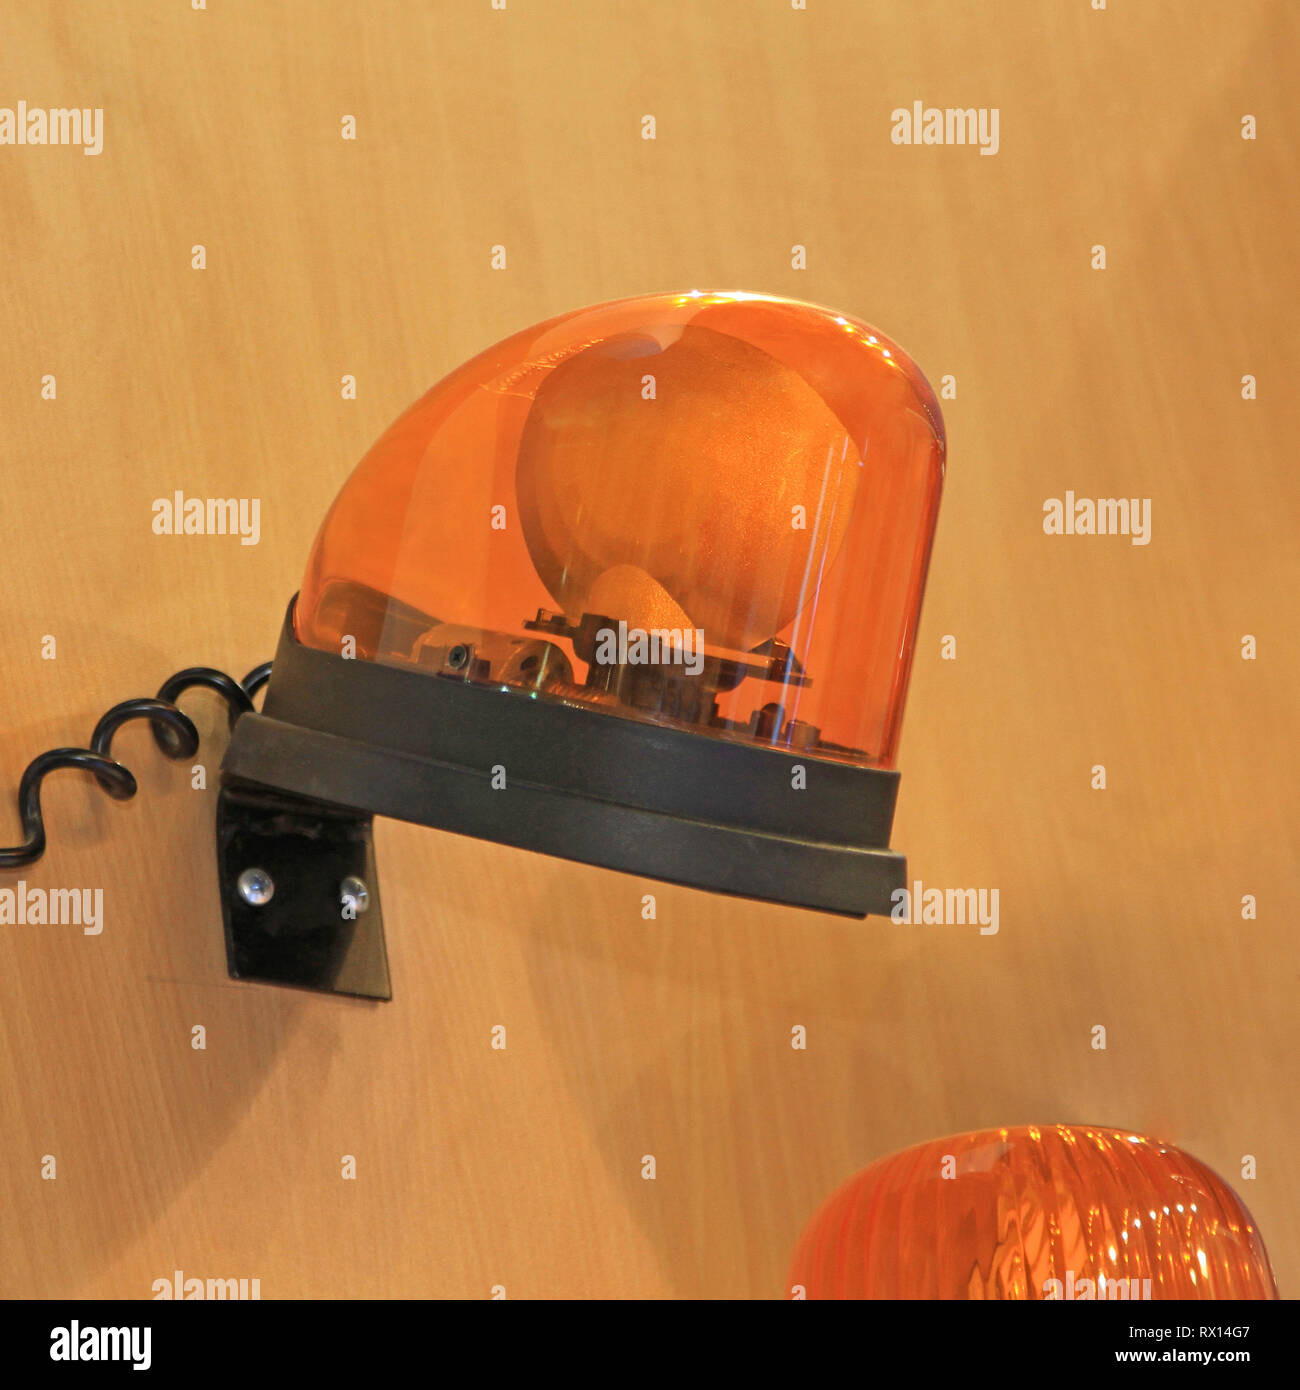 Amber Orange Rotating Light in Plastic Dome Stock Photo